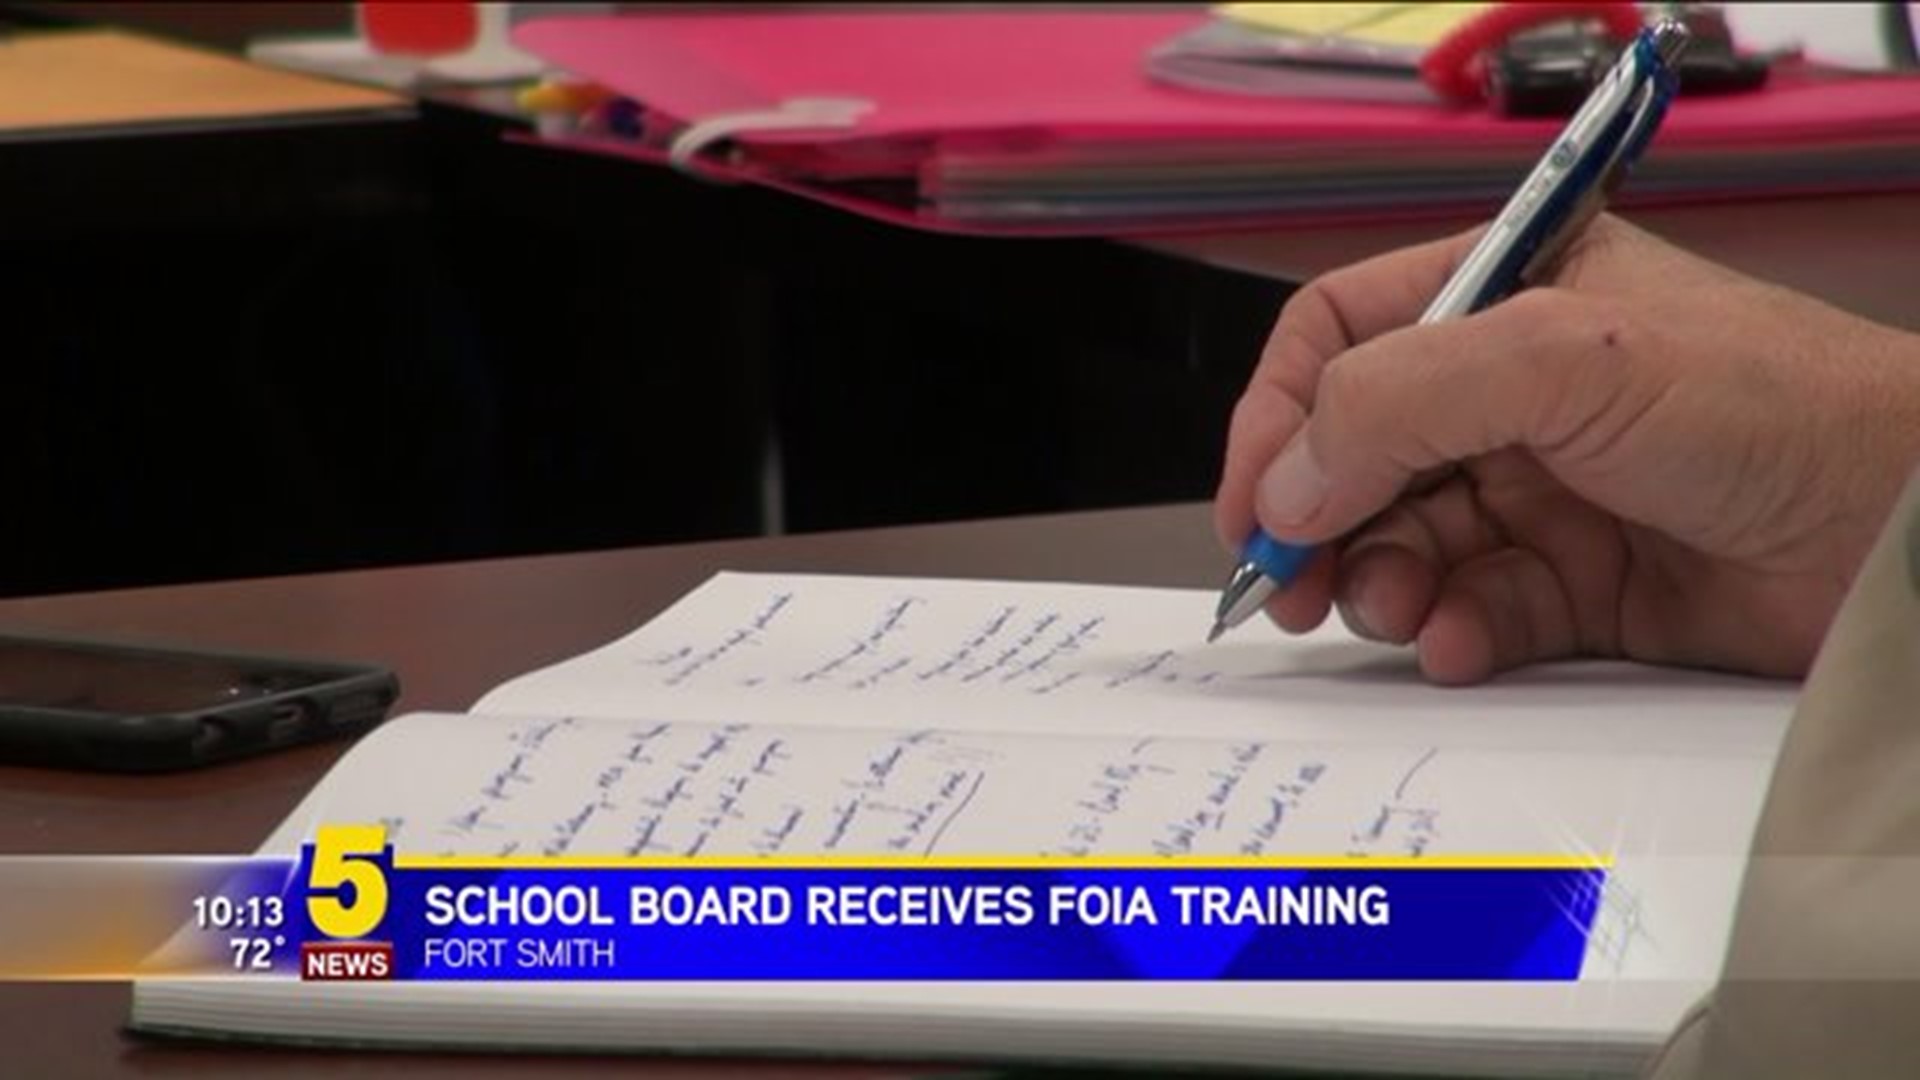 School Board Receives FOIA Training